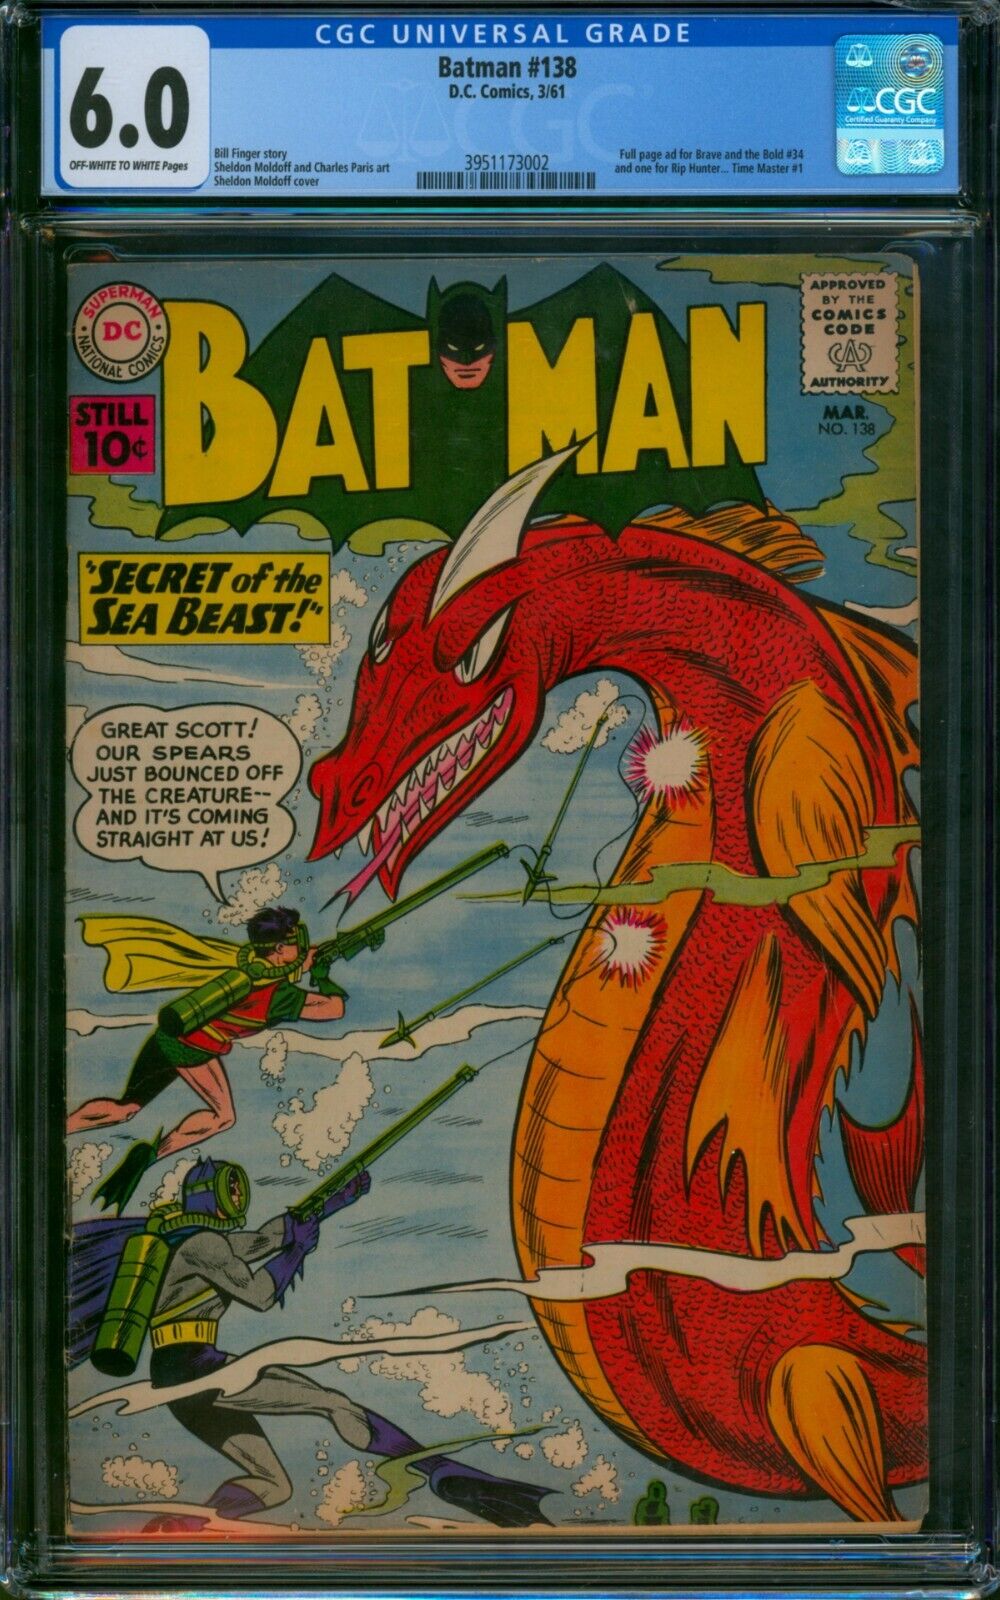 Batman #138 🌟 CGC 6.0 🌟 Classic Sea Beast Cover Silver Age DC Comic 1961